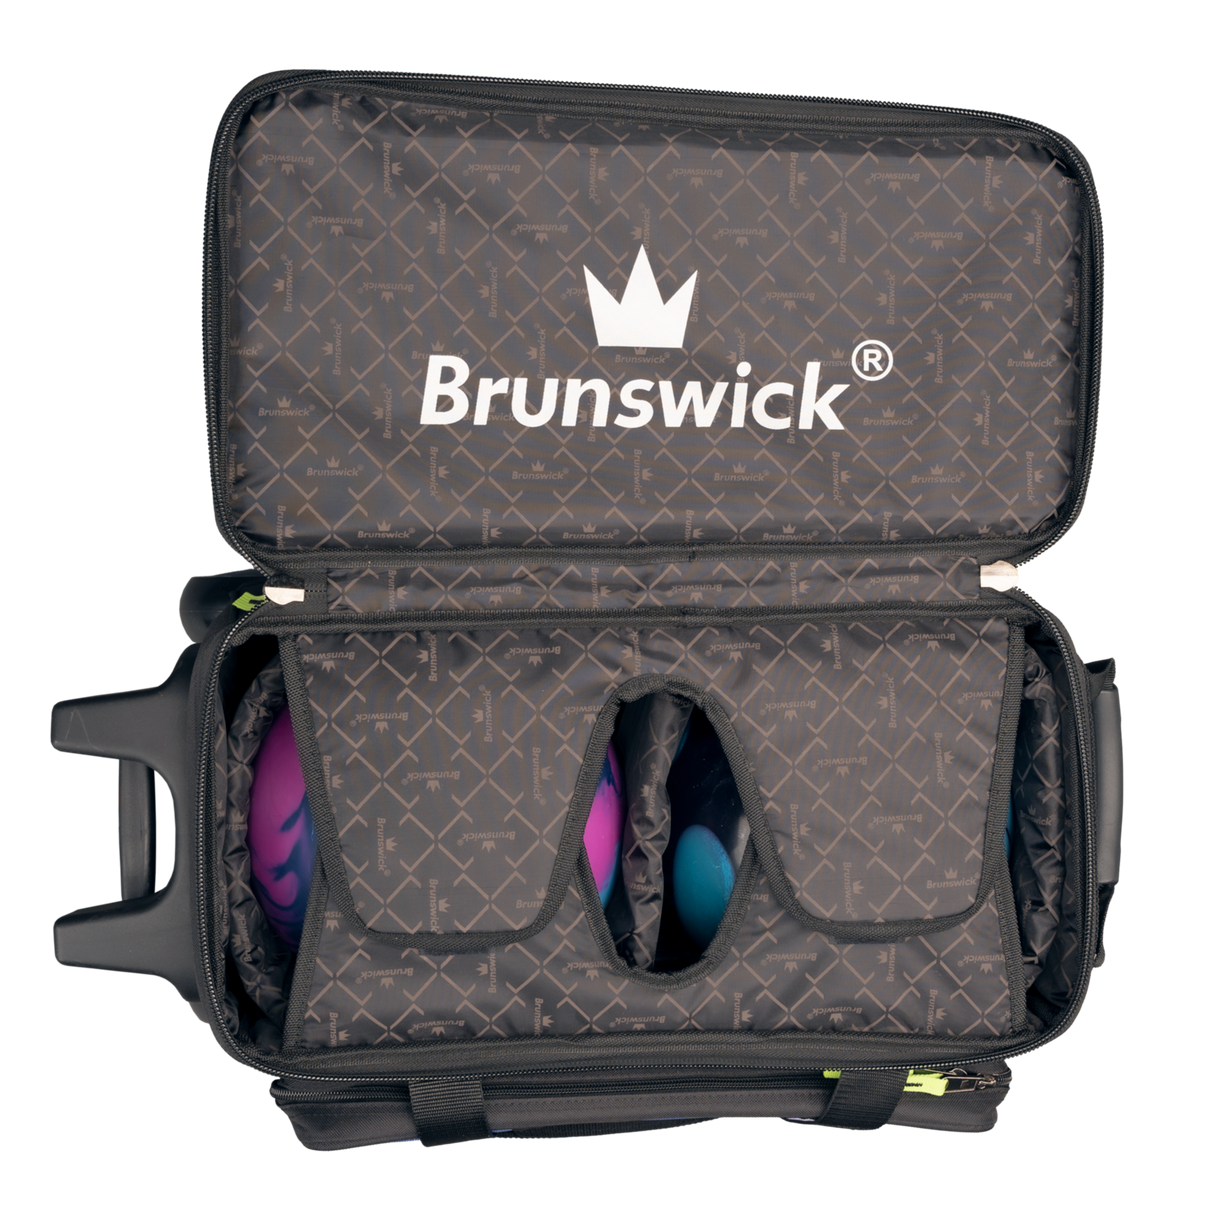 brunswick 2 ball roller charger bowling bag travel suitcase league tournament play sale discount coupon online pba tour quest black